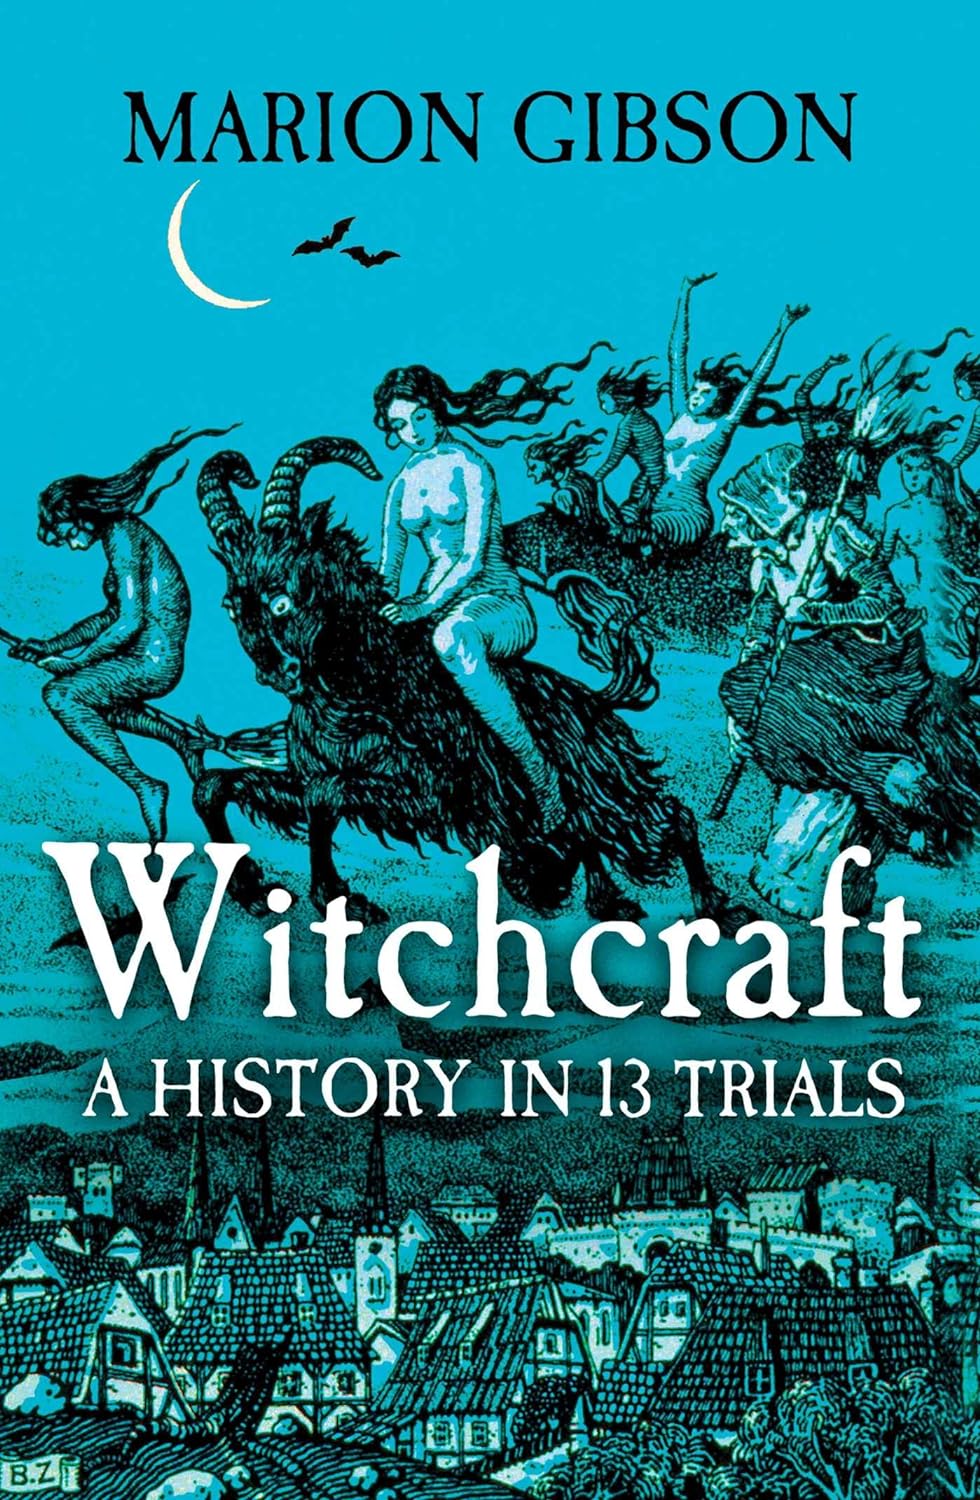 Review: Unlucky thirteen – witchcraft in 13 trials